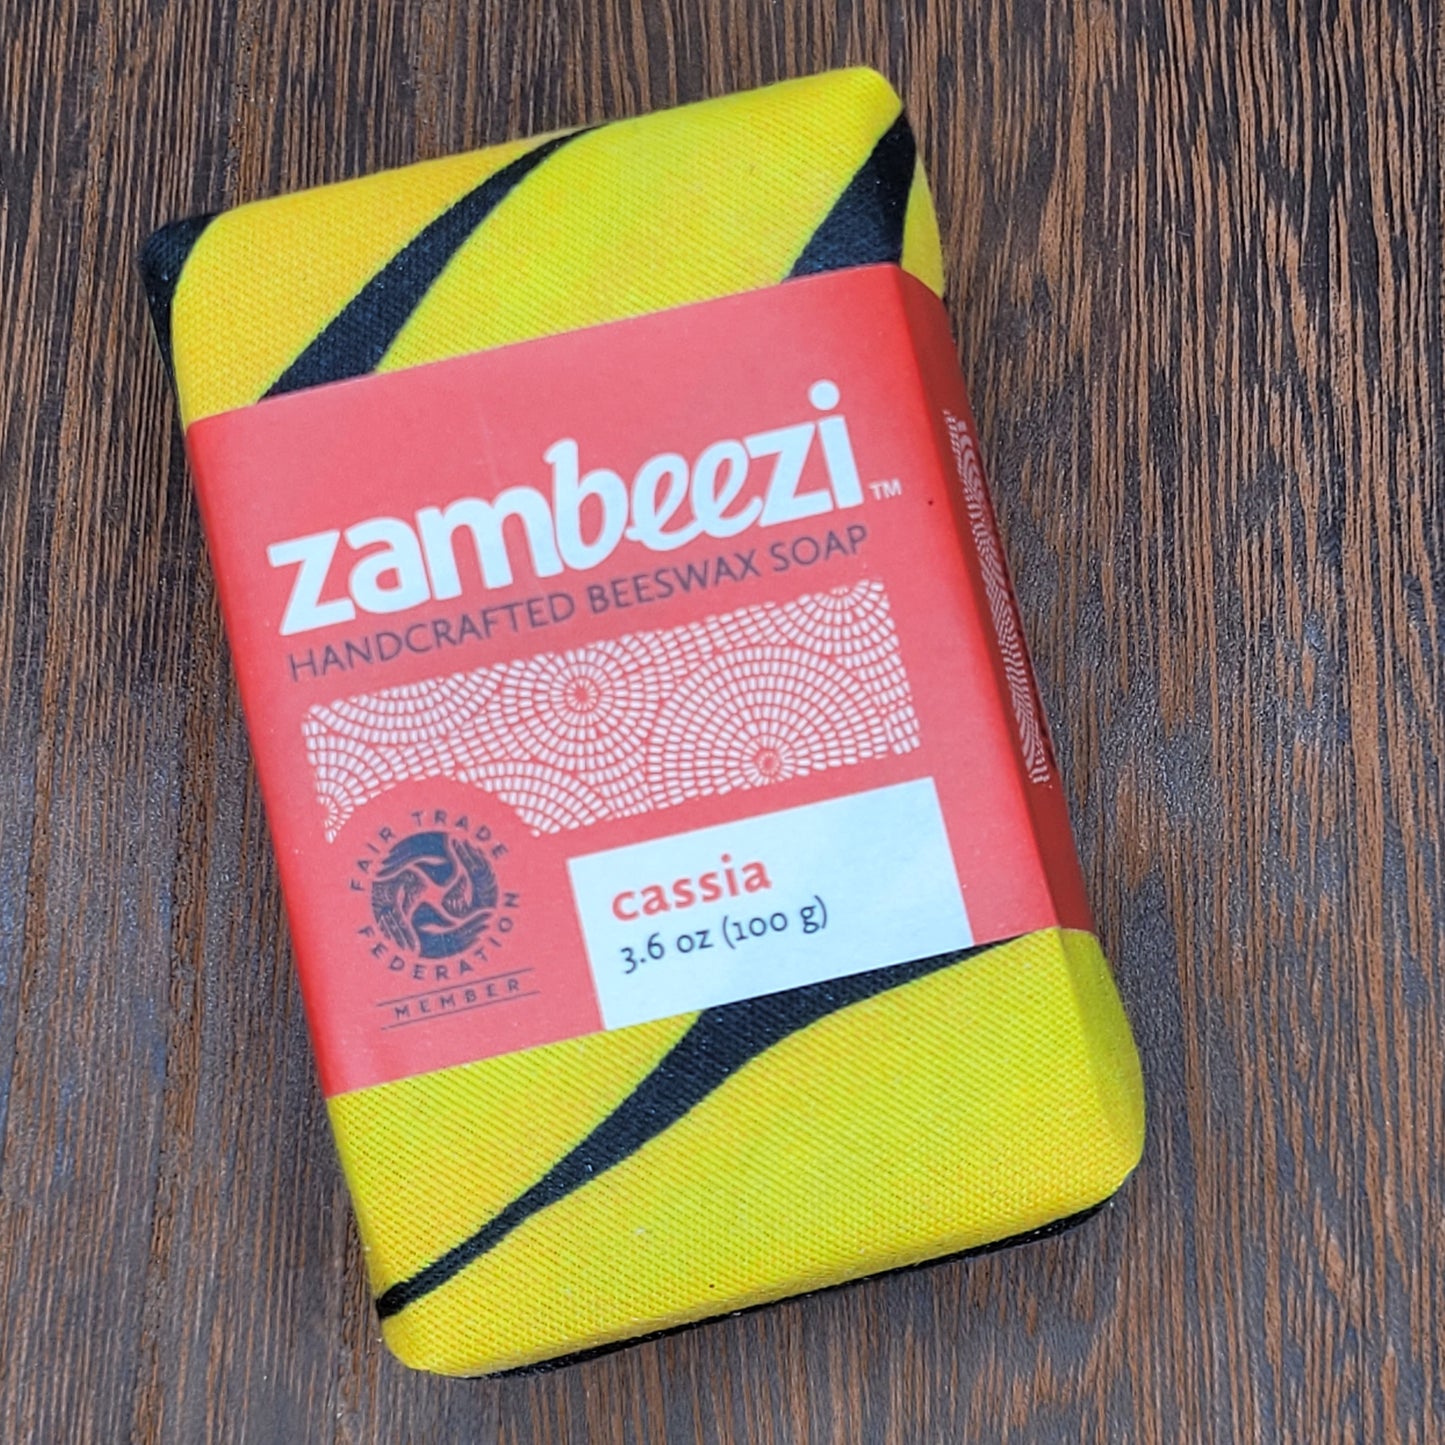 Cassia Beeswax Soap by Zambeezi